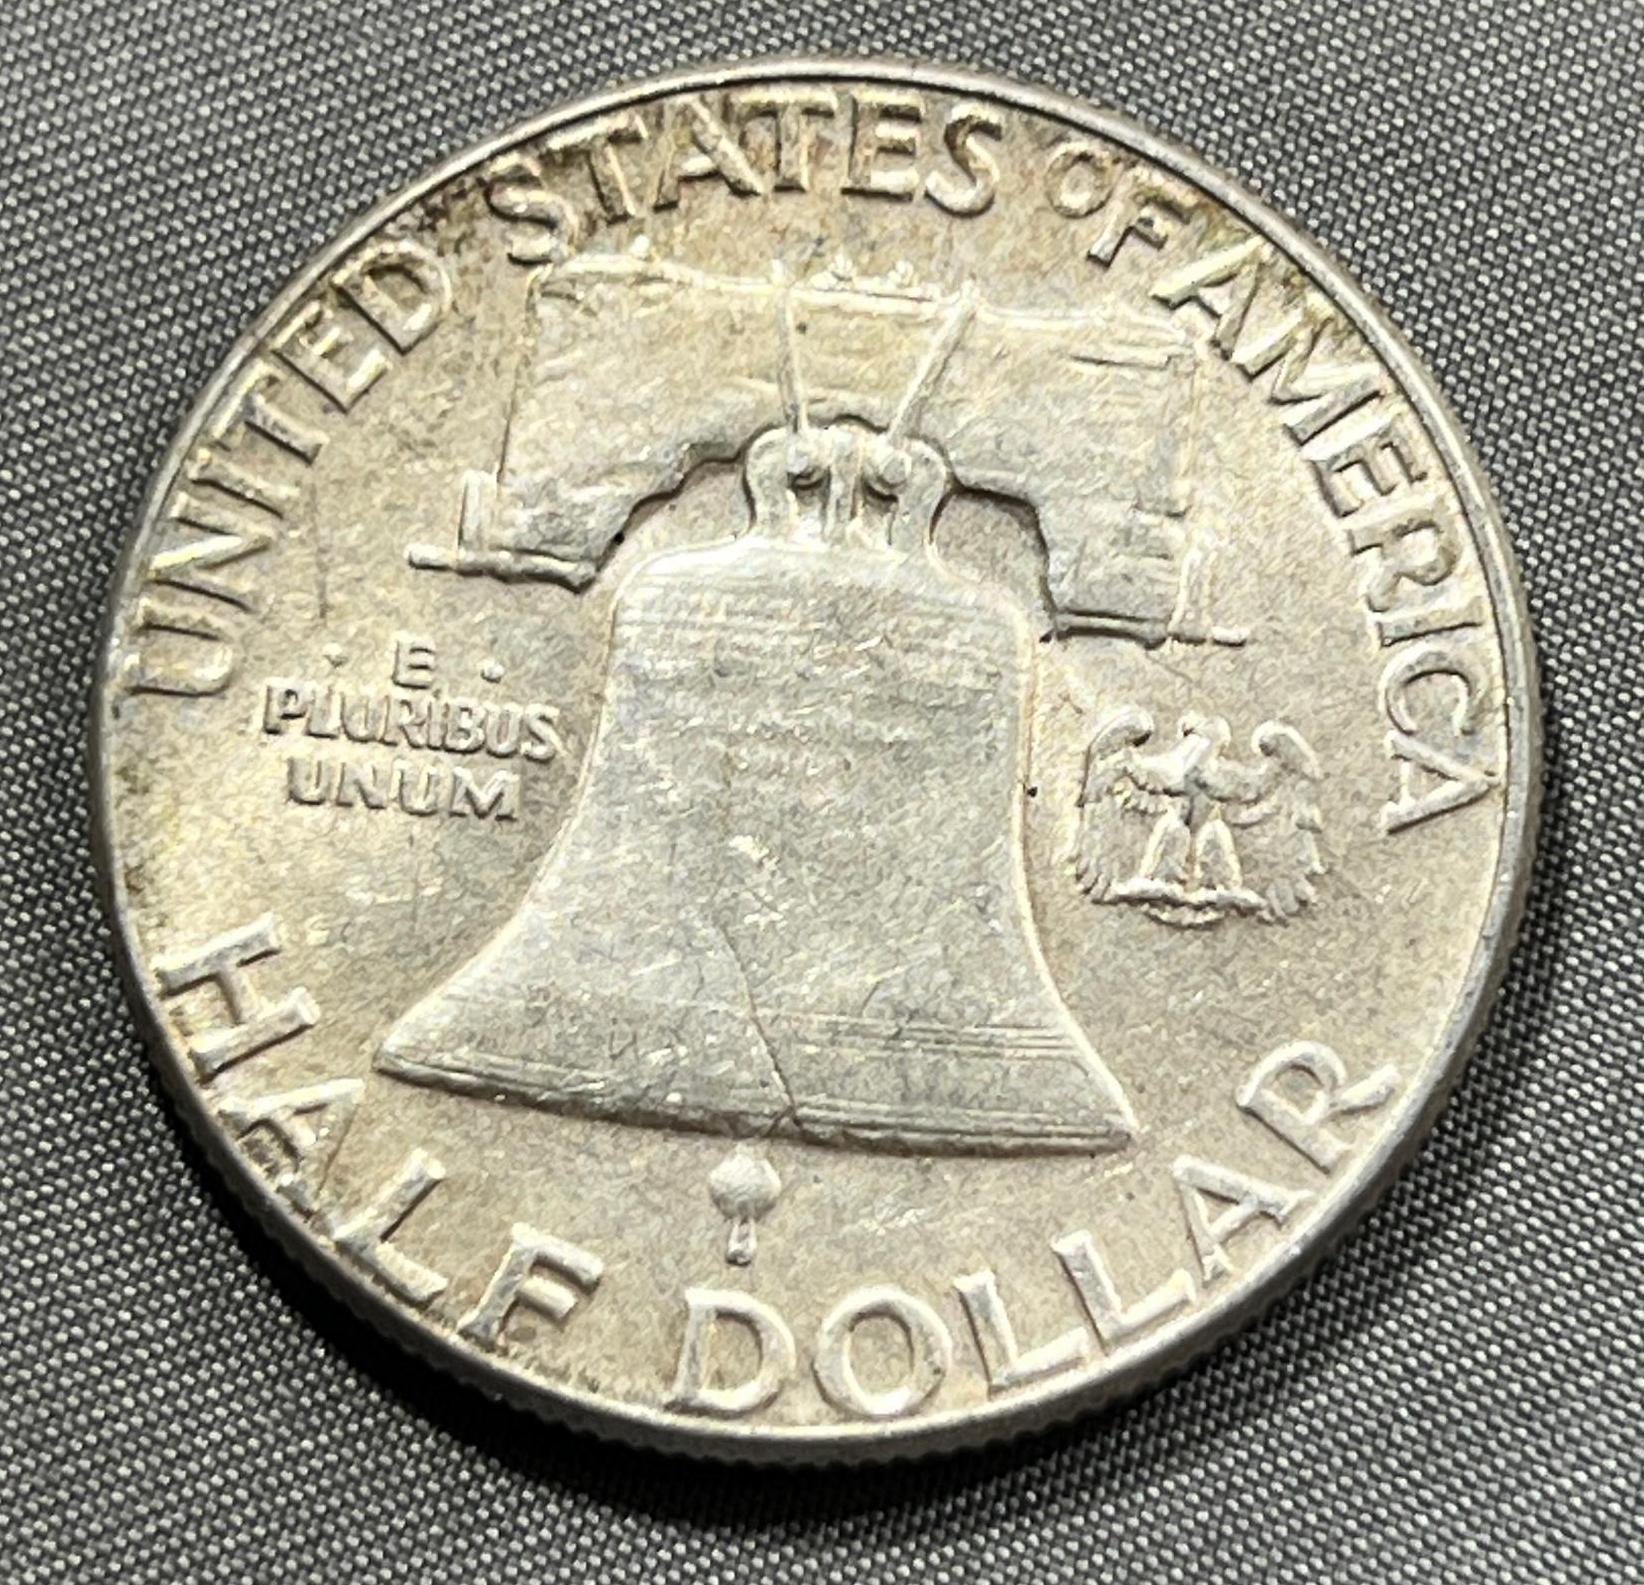 1951 Benjamin Franklin Half Dollar, 90% Silver